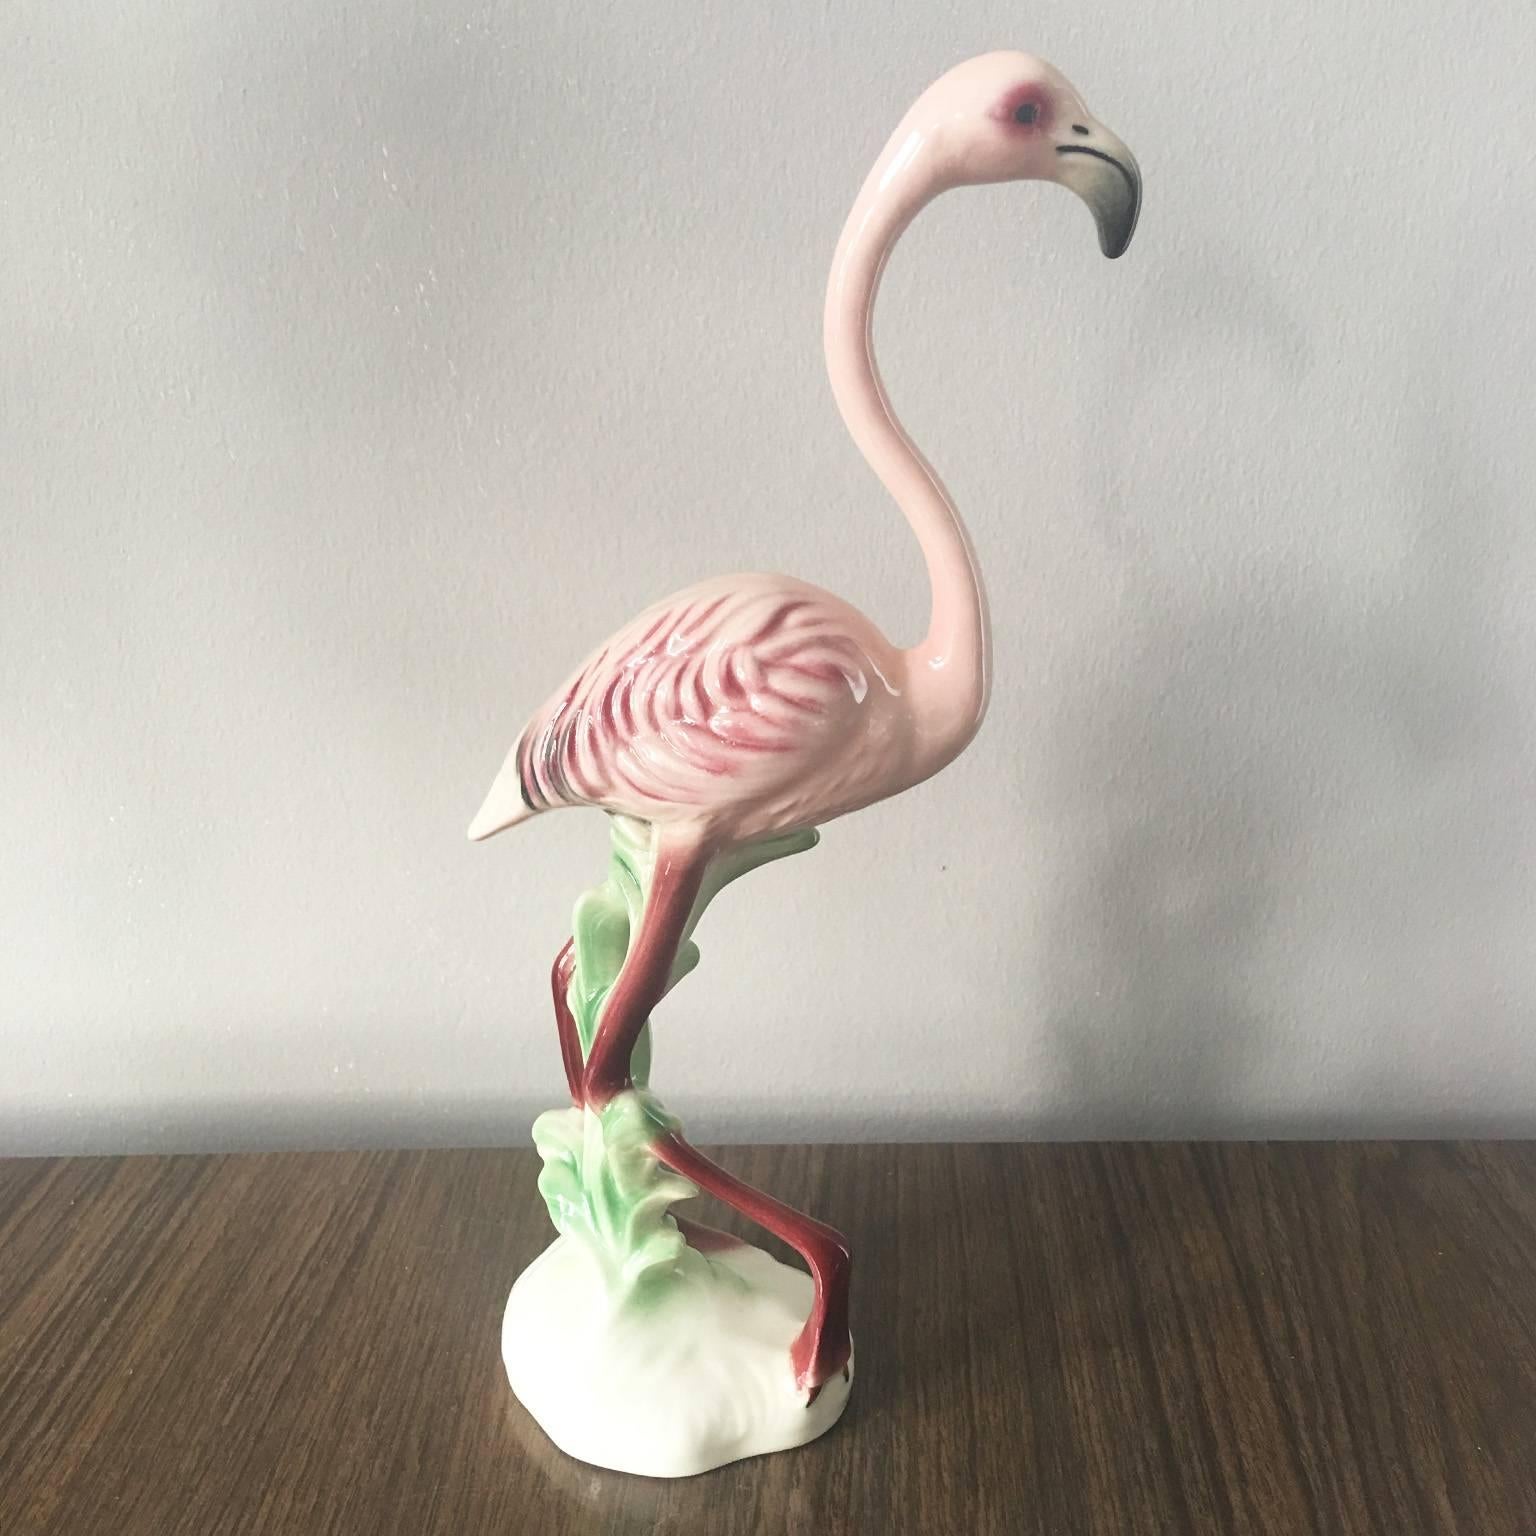 Vintage pink flamingo figurine stamped Goebel W Germany
Mint condition, no cips
Measures: H 25 cm.
   